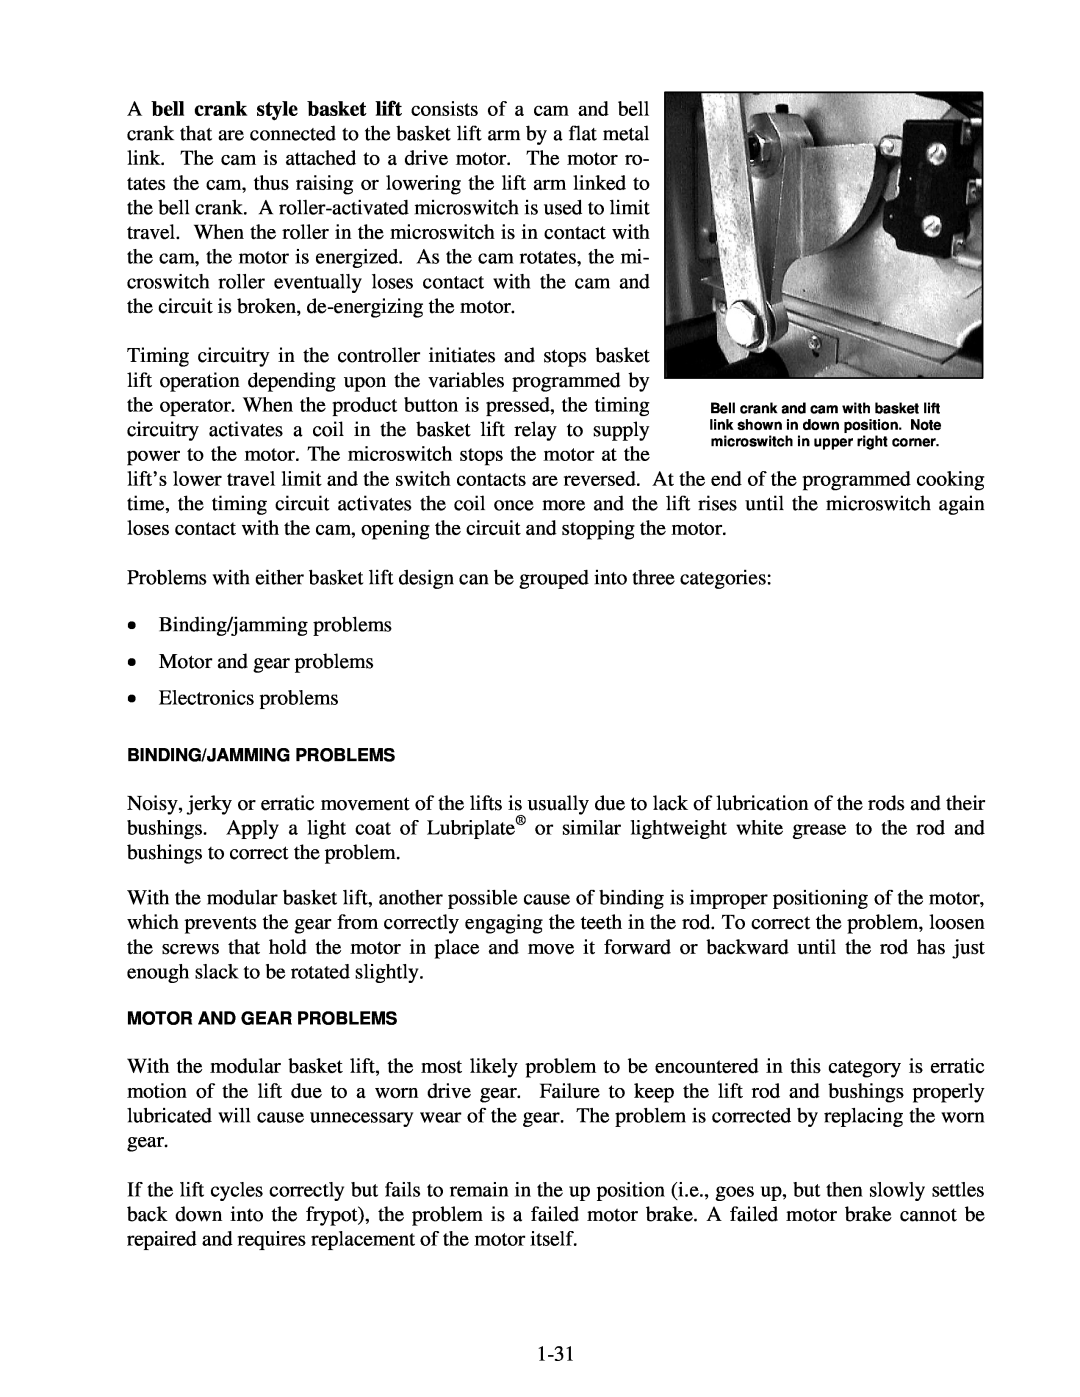 Frymaster H50 Series manual •Binding/jamming problems 